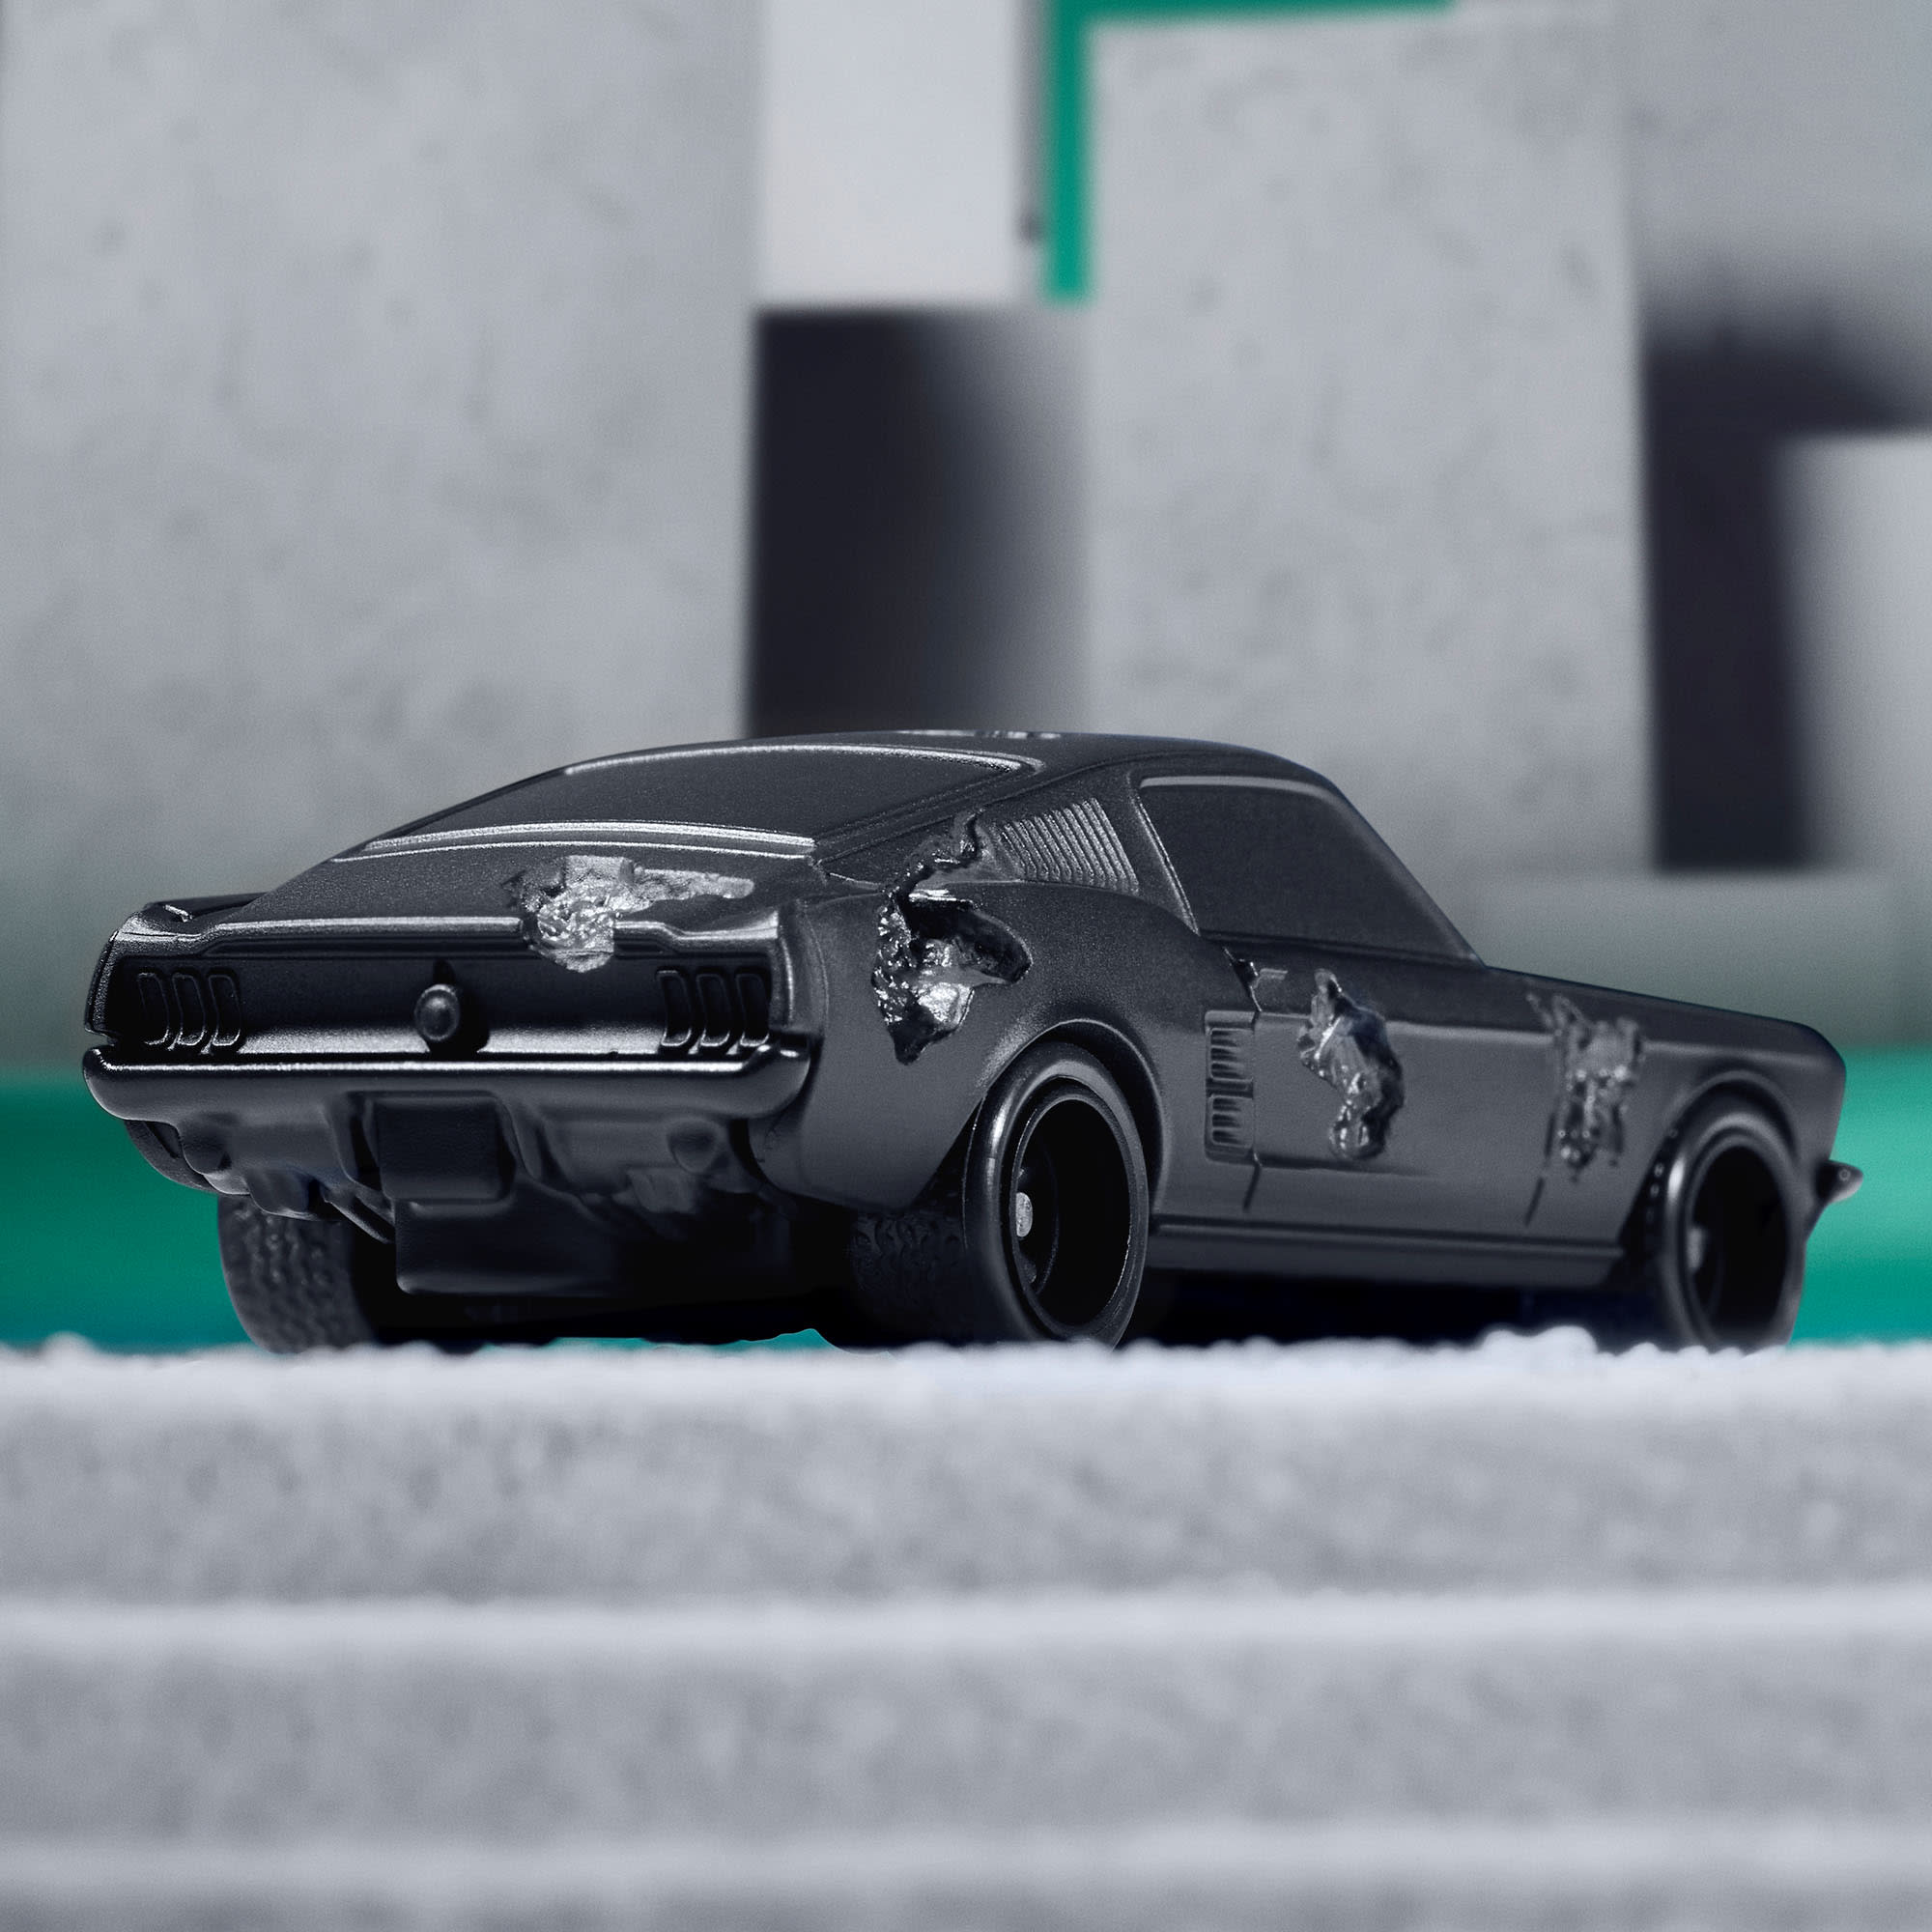 Hot Wheels x Daniel Arsham Eroded Mustang | Mattel Creations